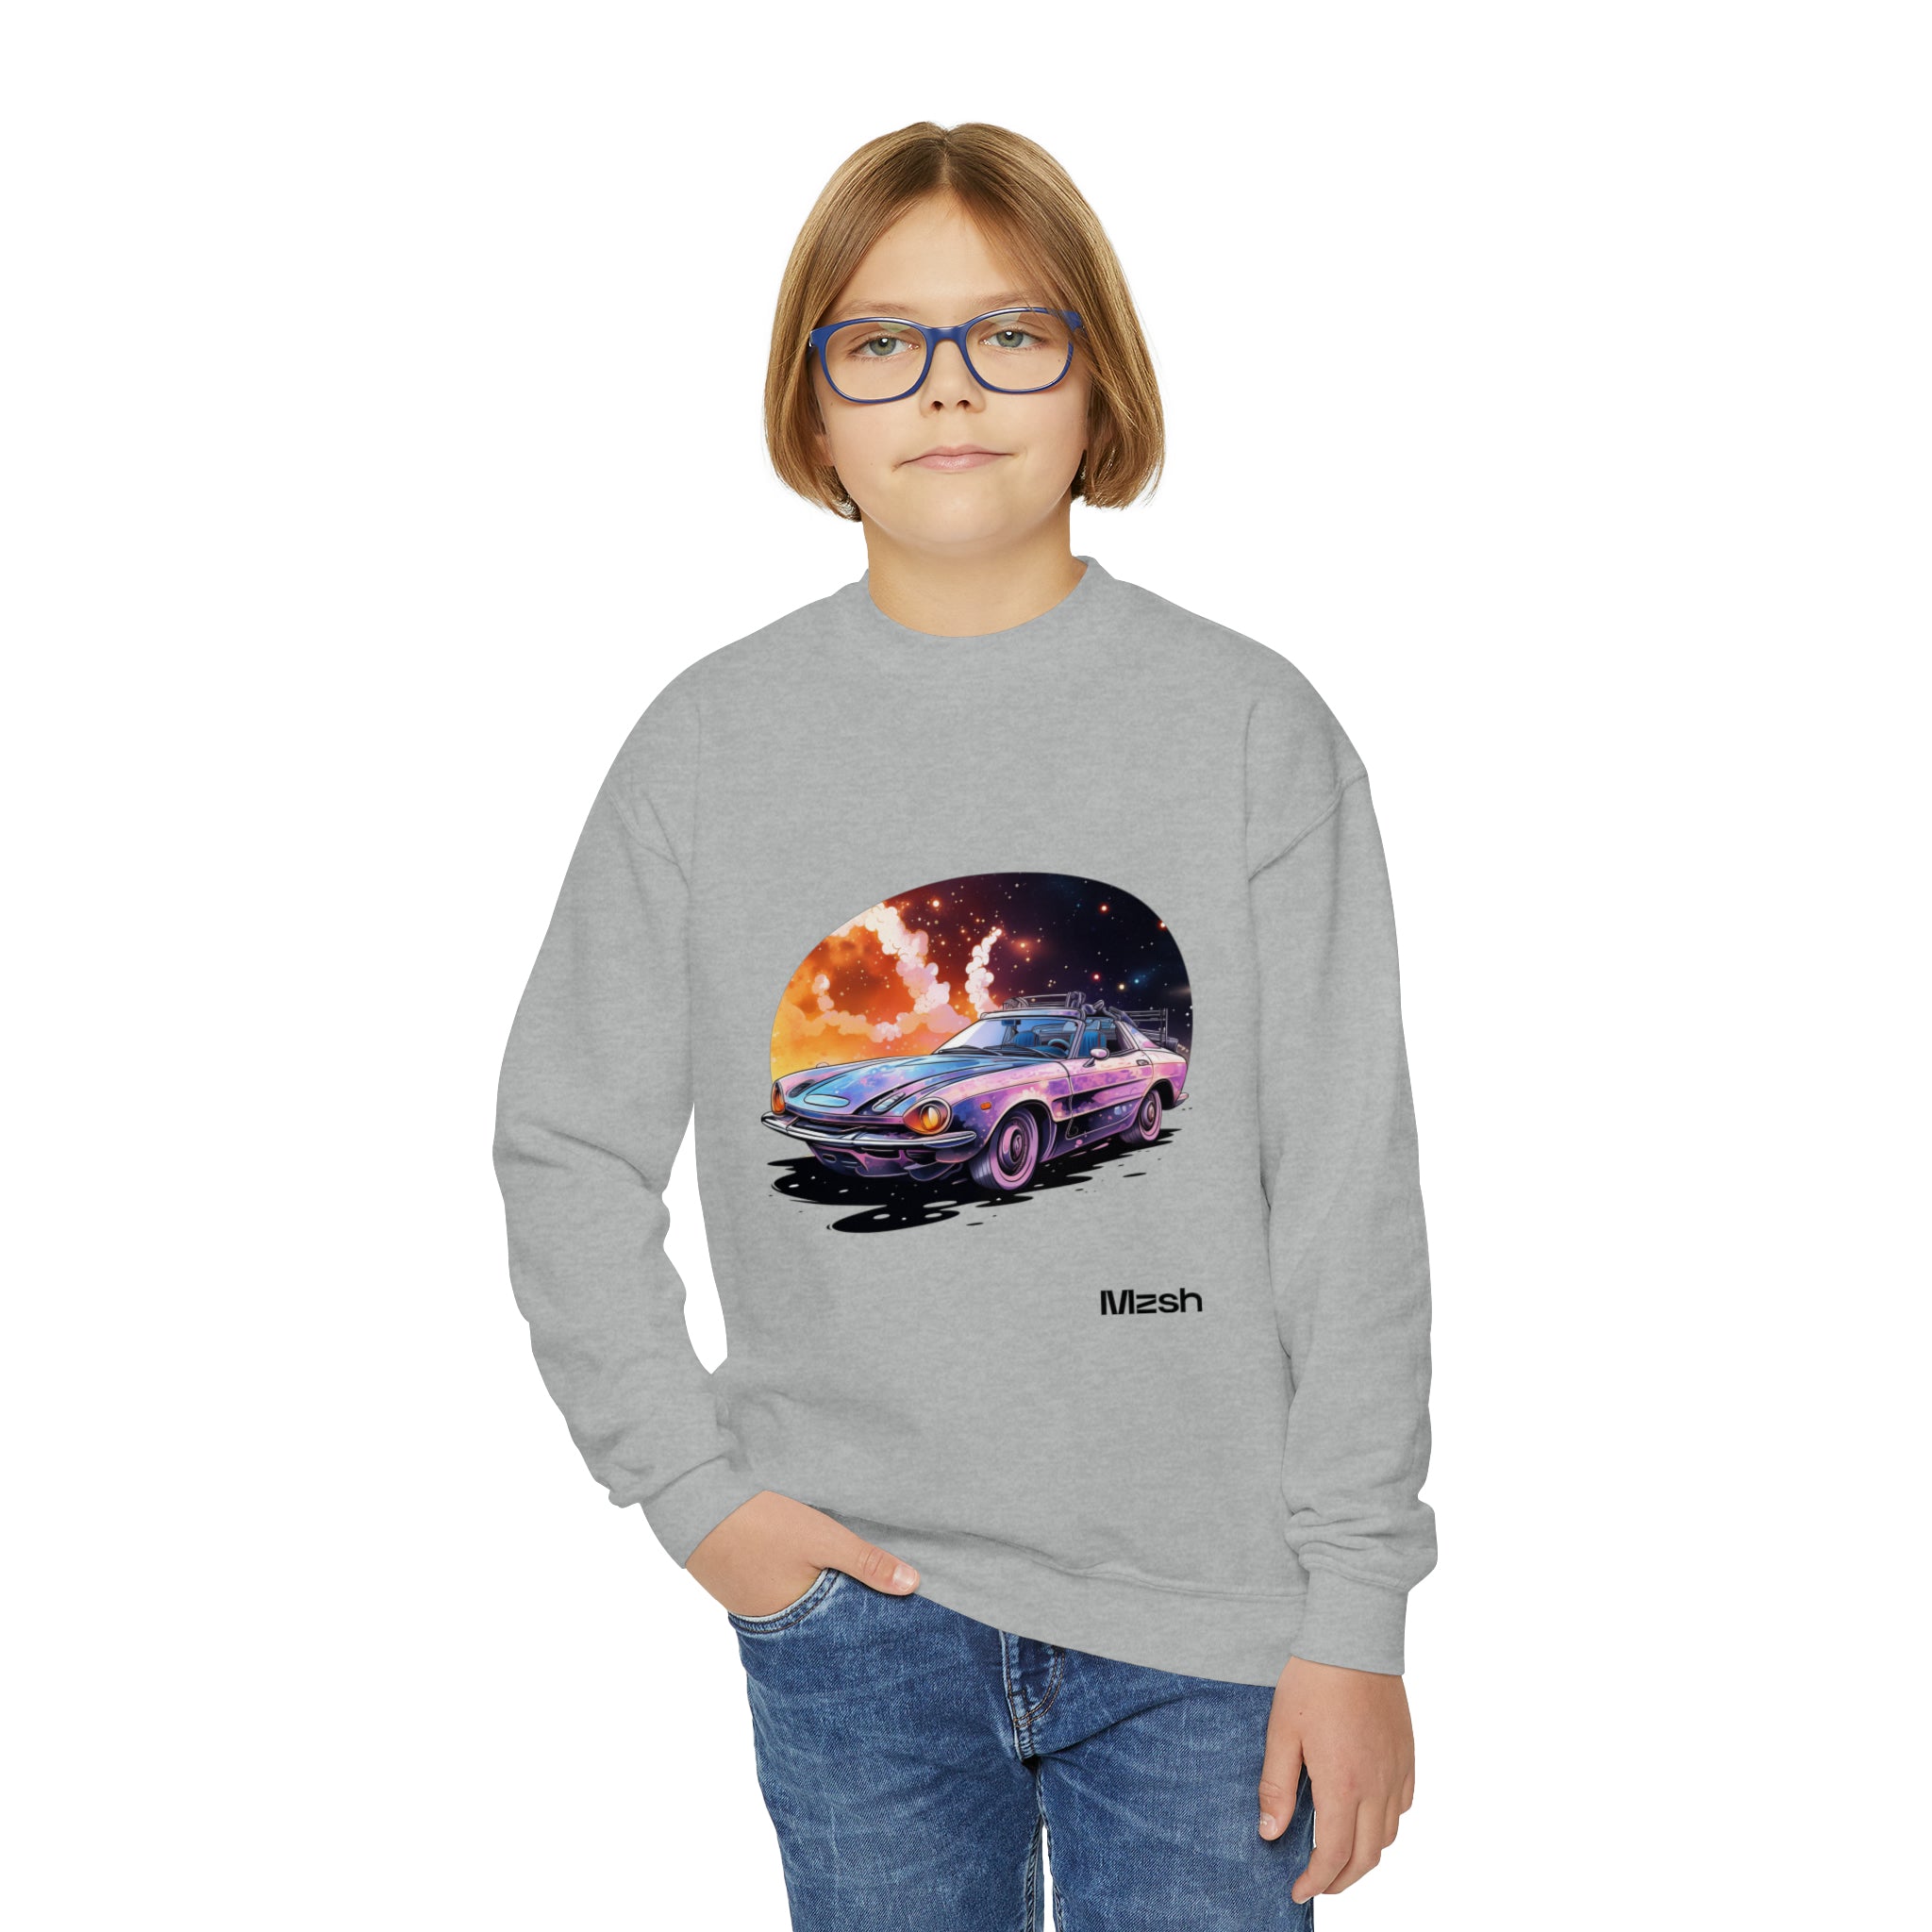 GalaxyGlide - Sweatshirt